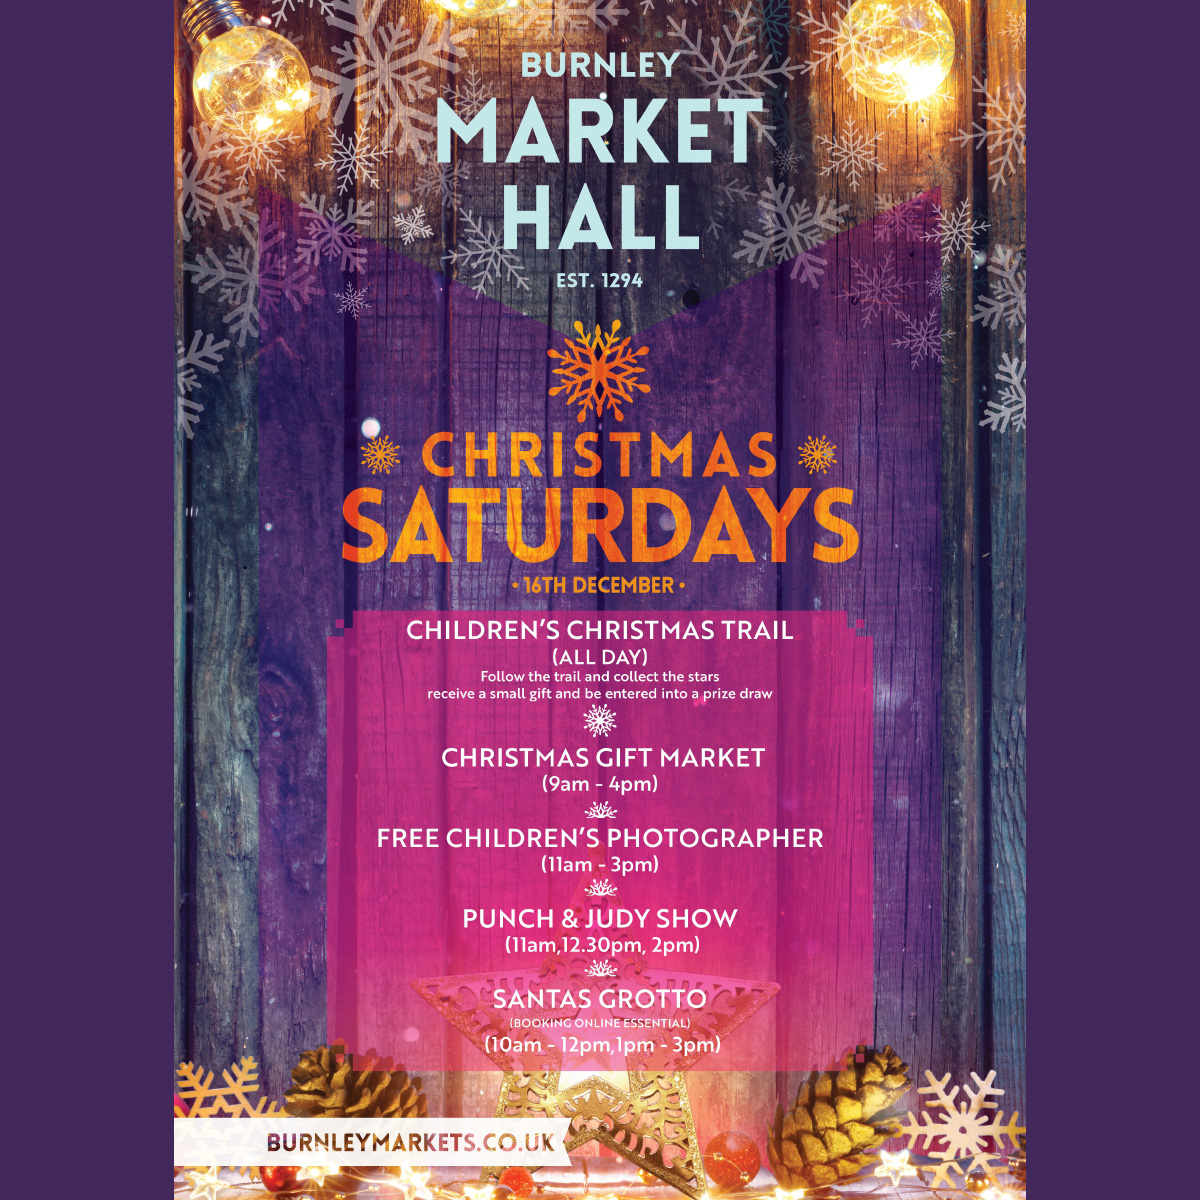 Burnley Market Hall Christmas Saturdays – 16th December